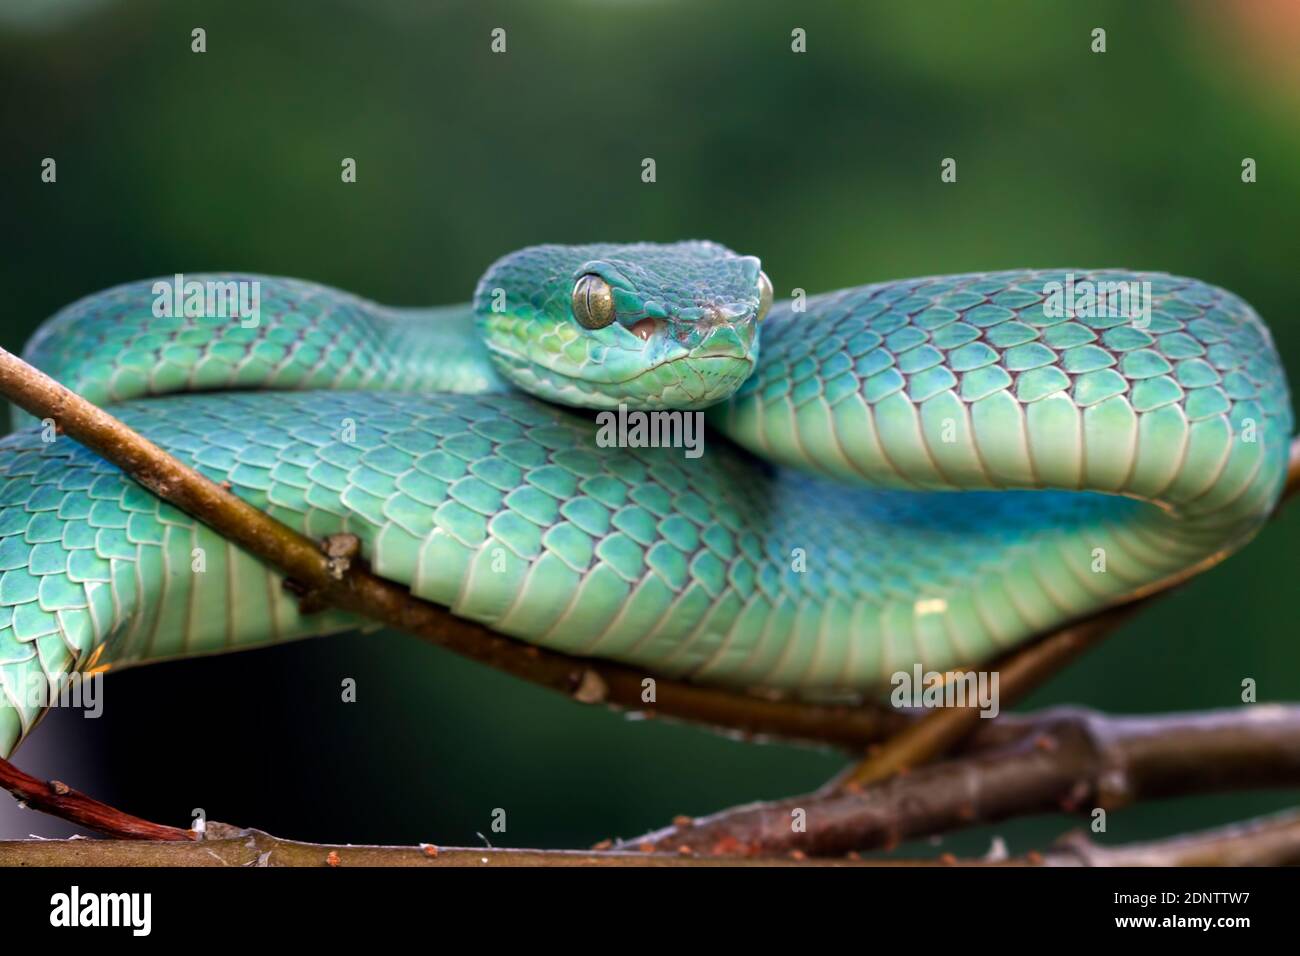 Blue viper snake on a branch -Fotos und -Bildmaterial in hoher ...